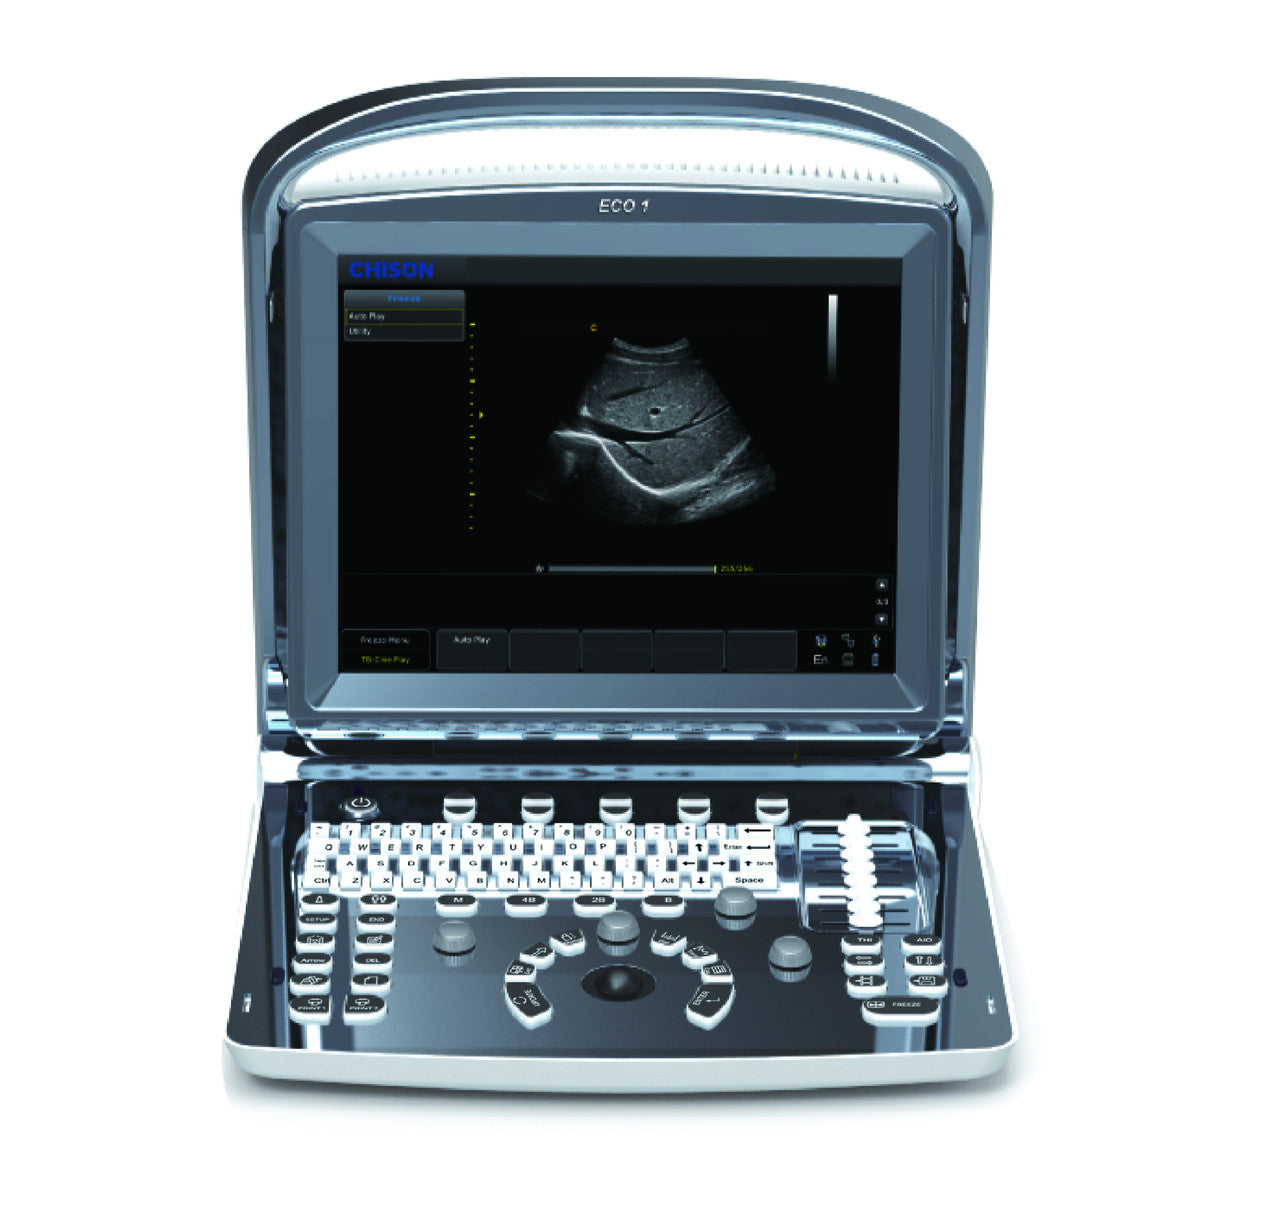 B/W Ultrasounds